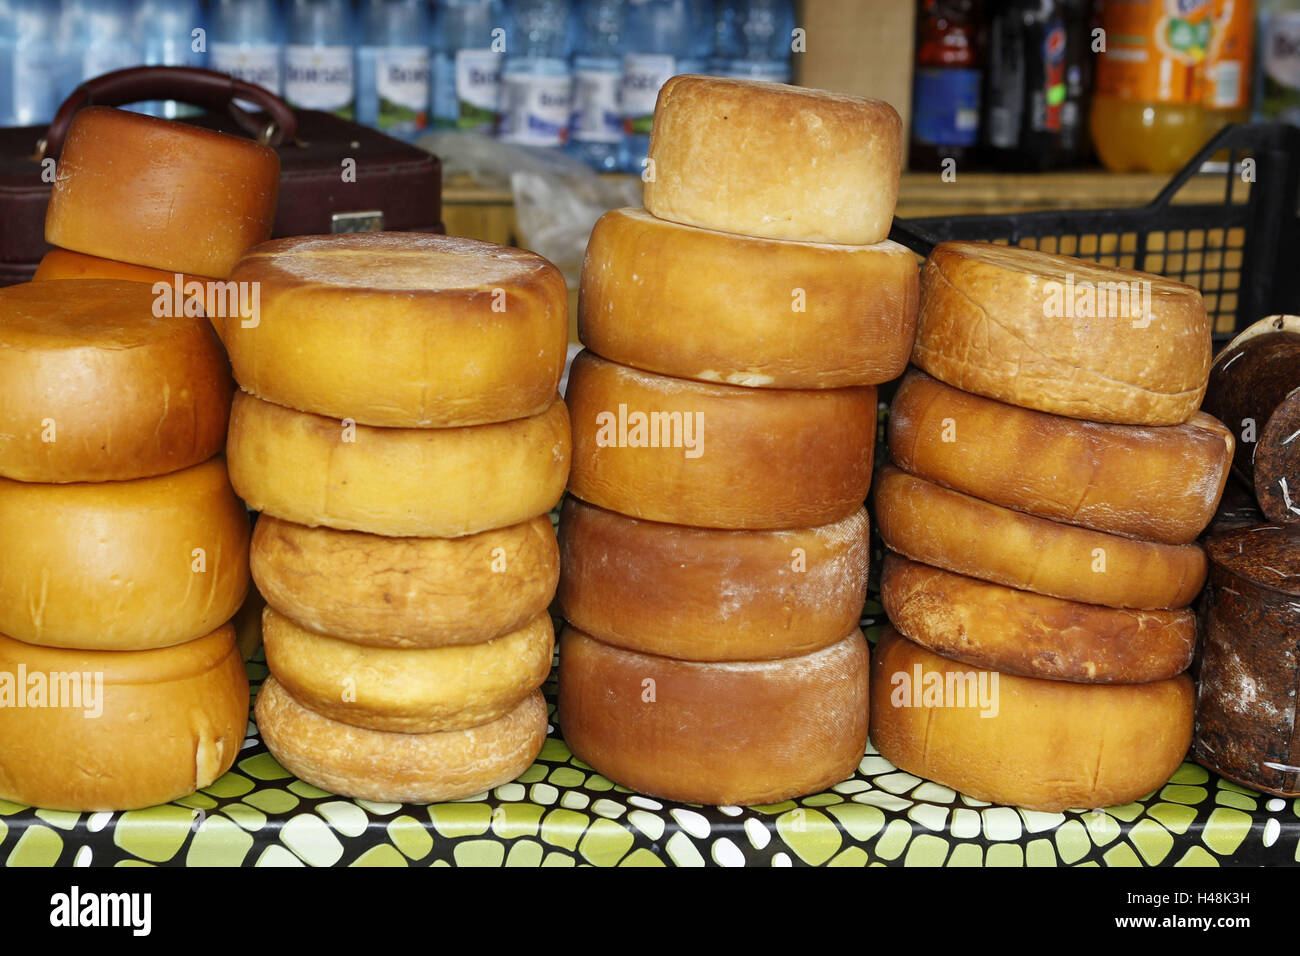 Cheese, loading, sales, Romania, Stock Photo